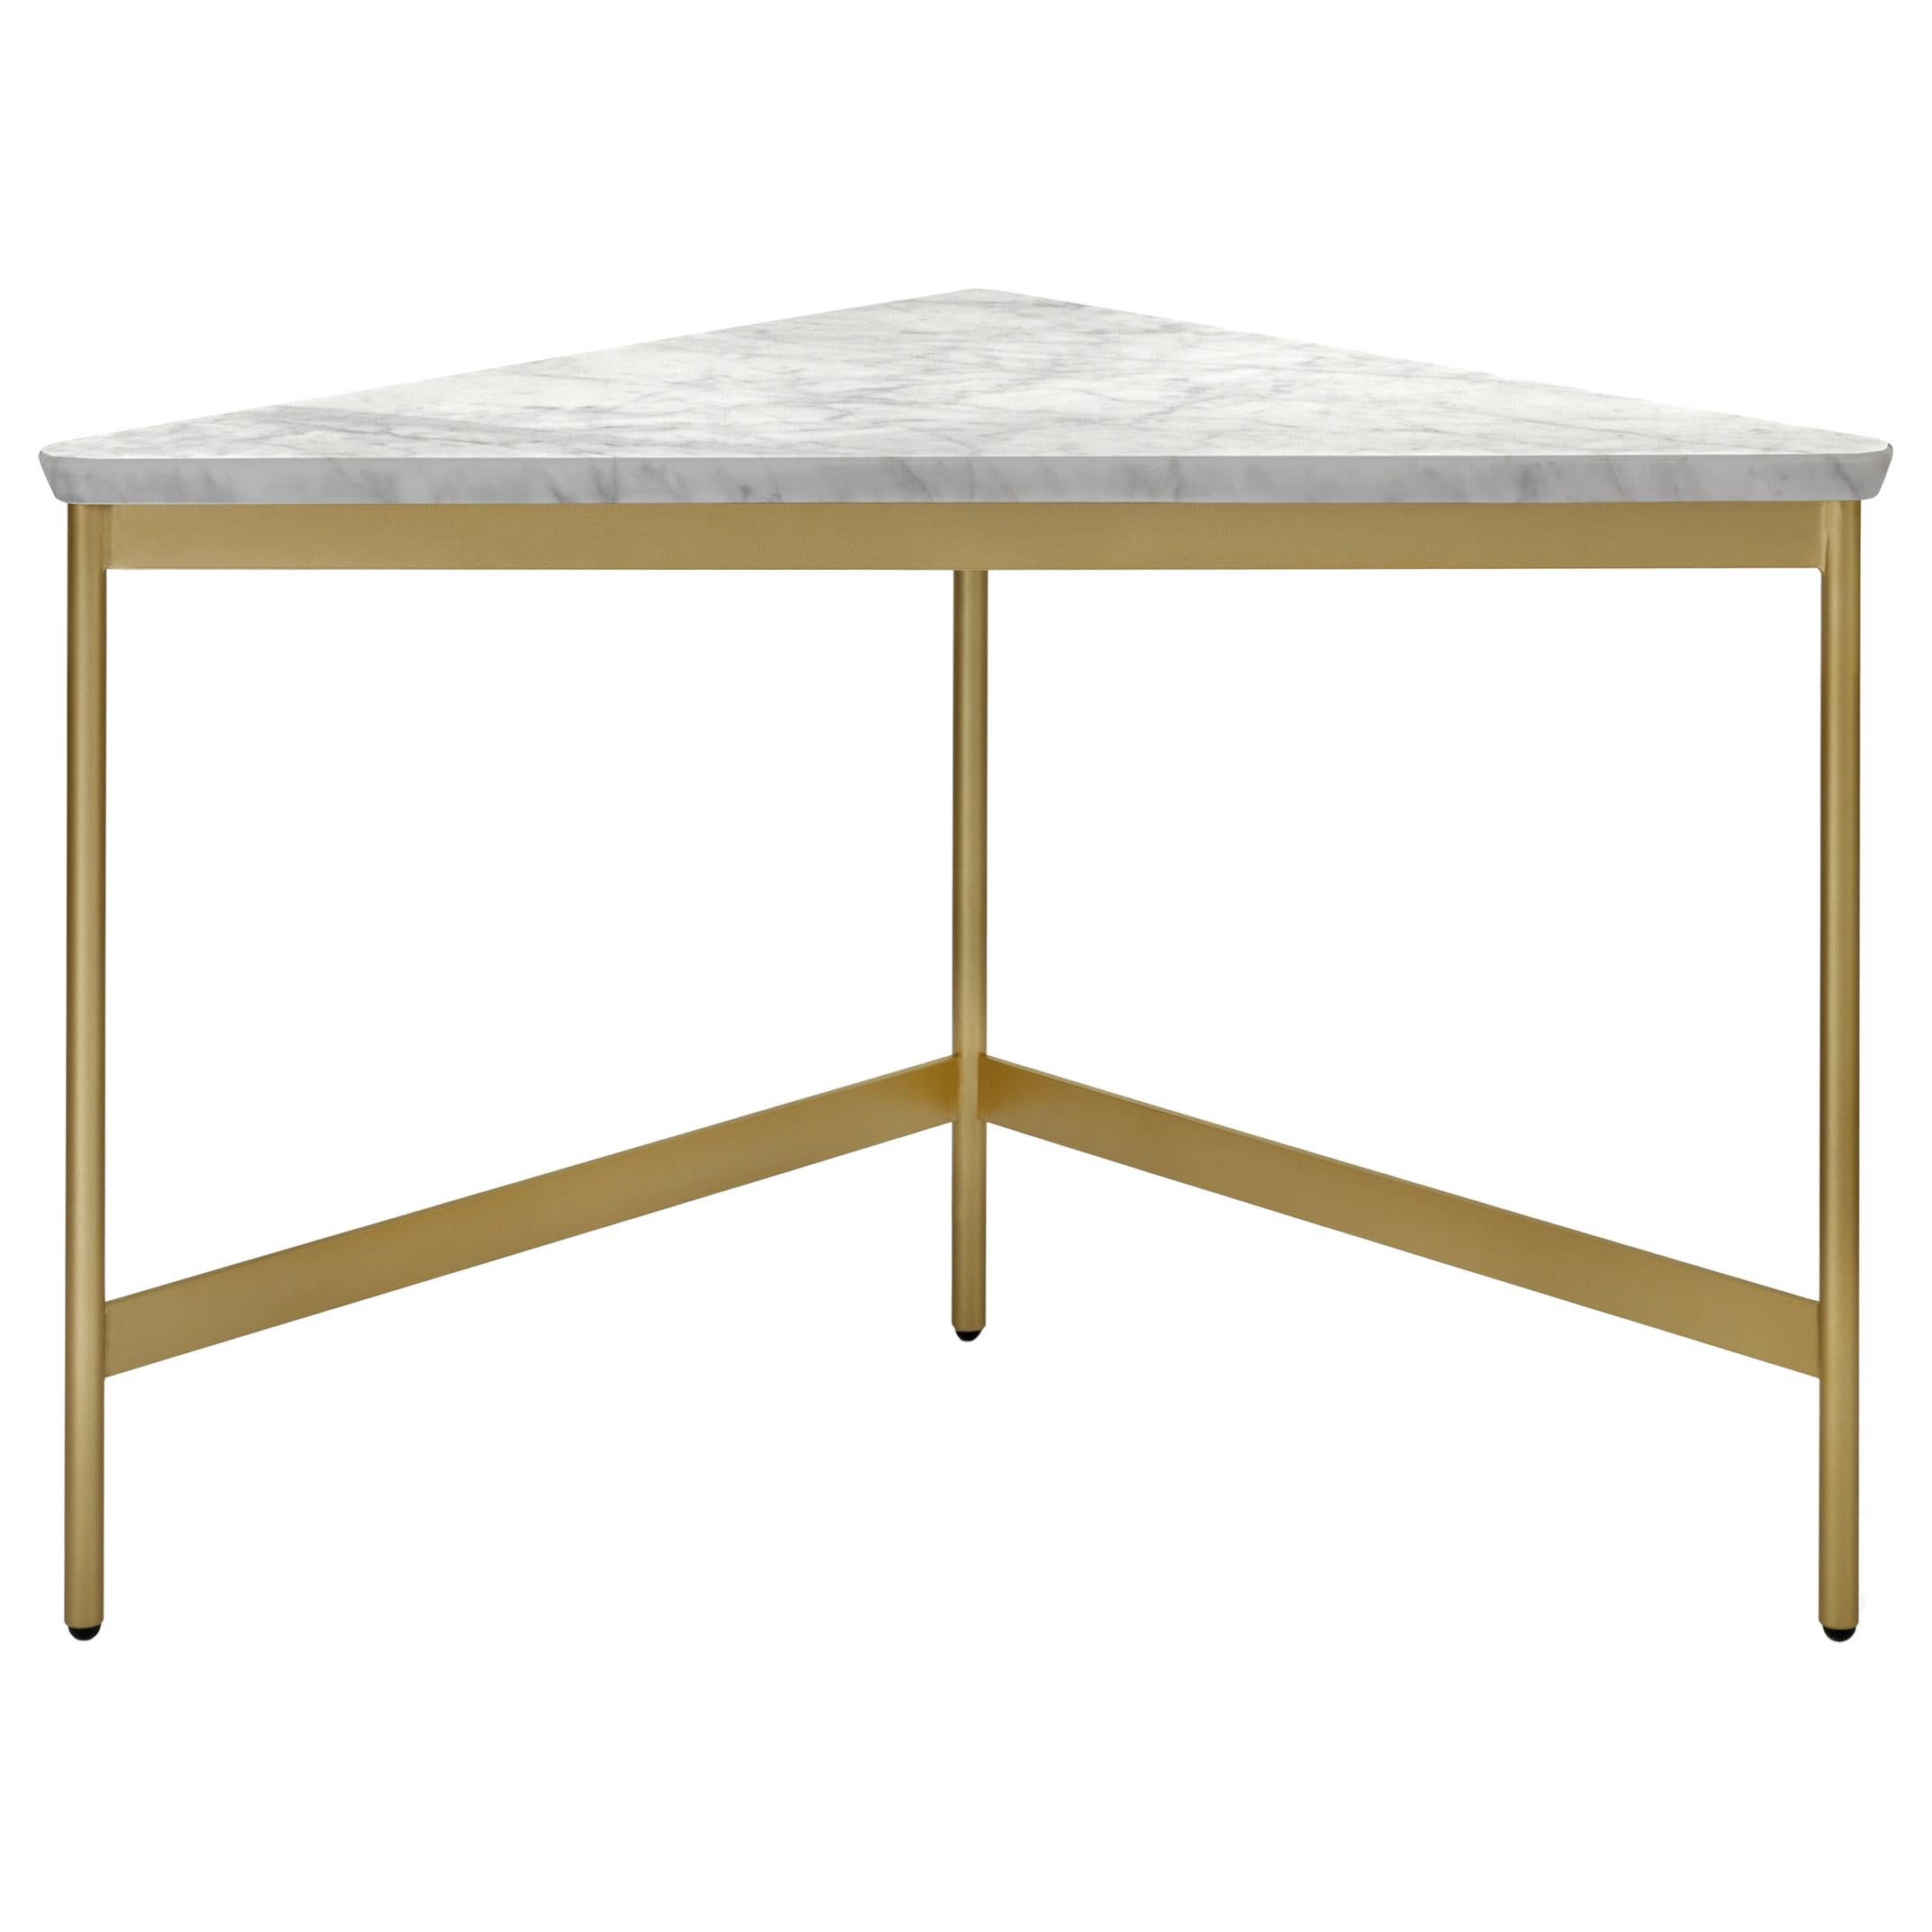 Arflex Capilano 55cm Small Table in White Carrara Marble-Top by Luca Nichetto For Sale